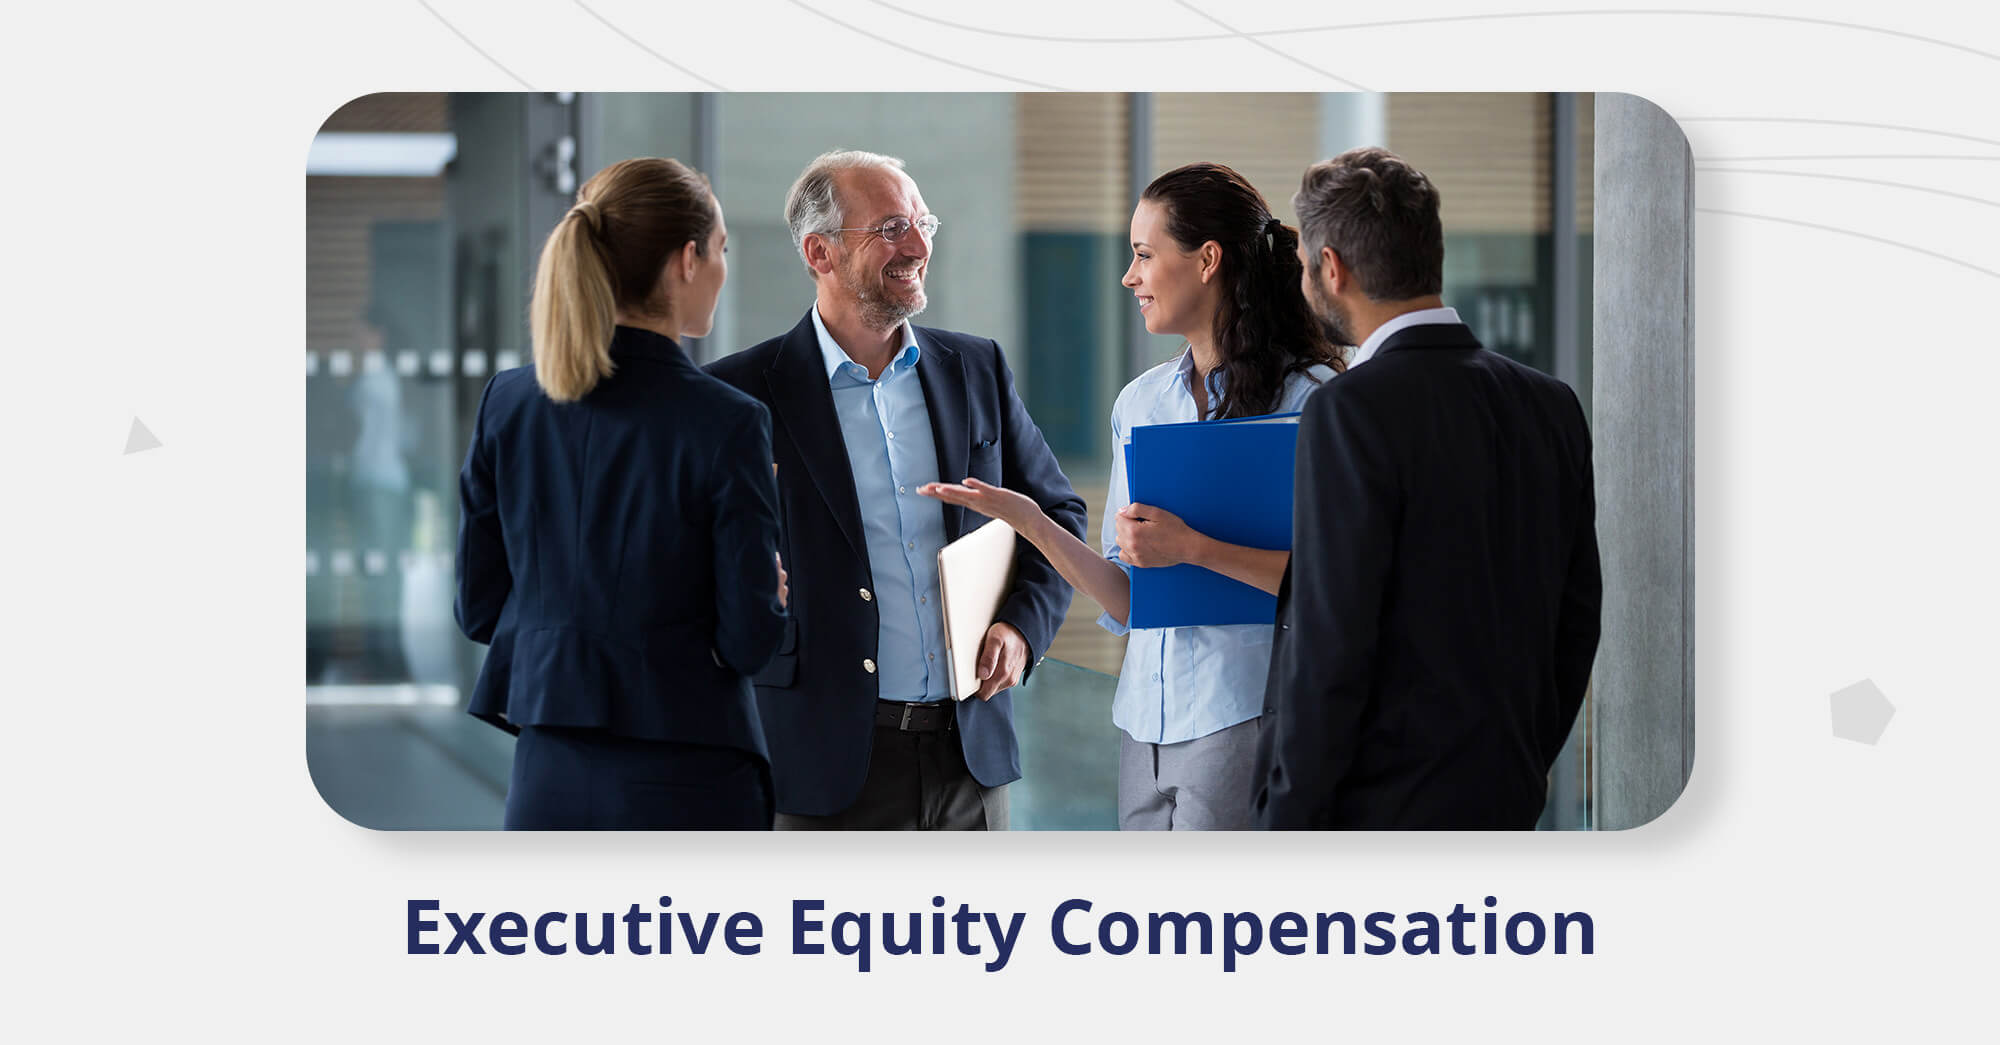 Executive Equity Compensation